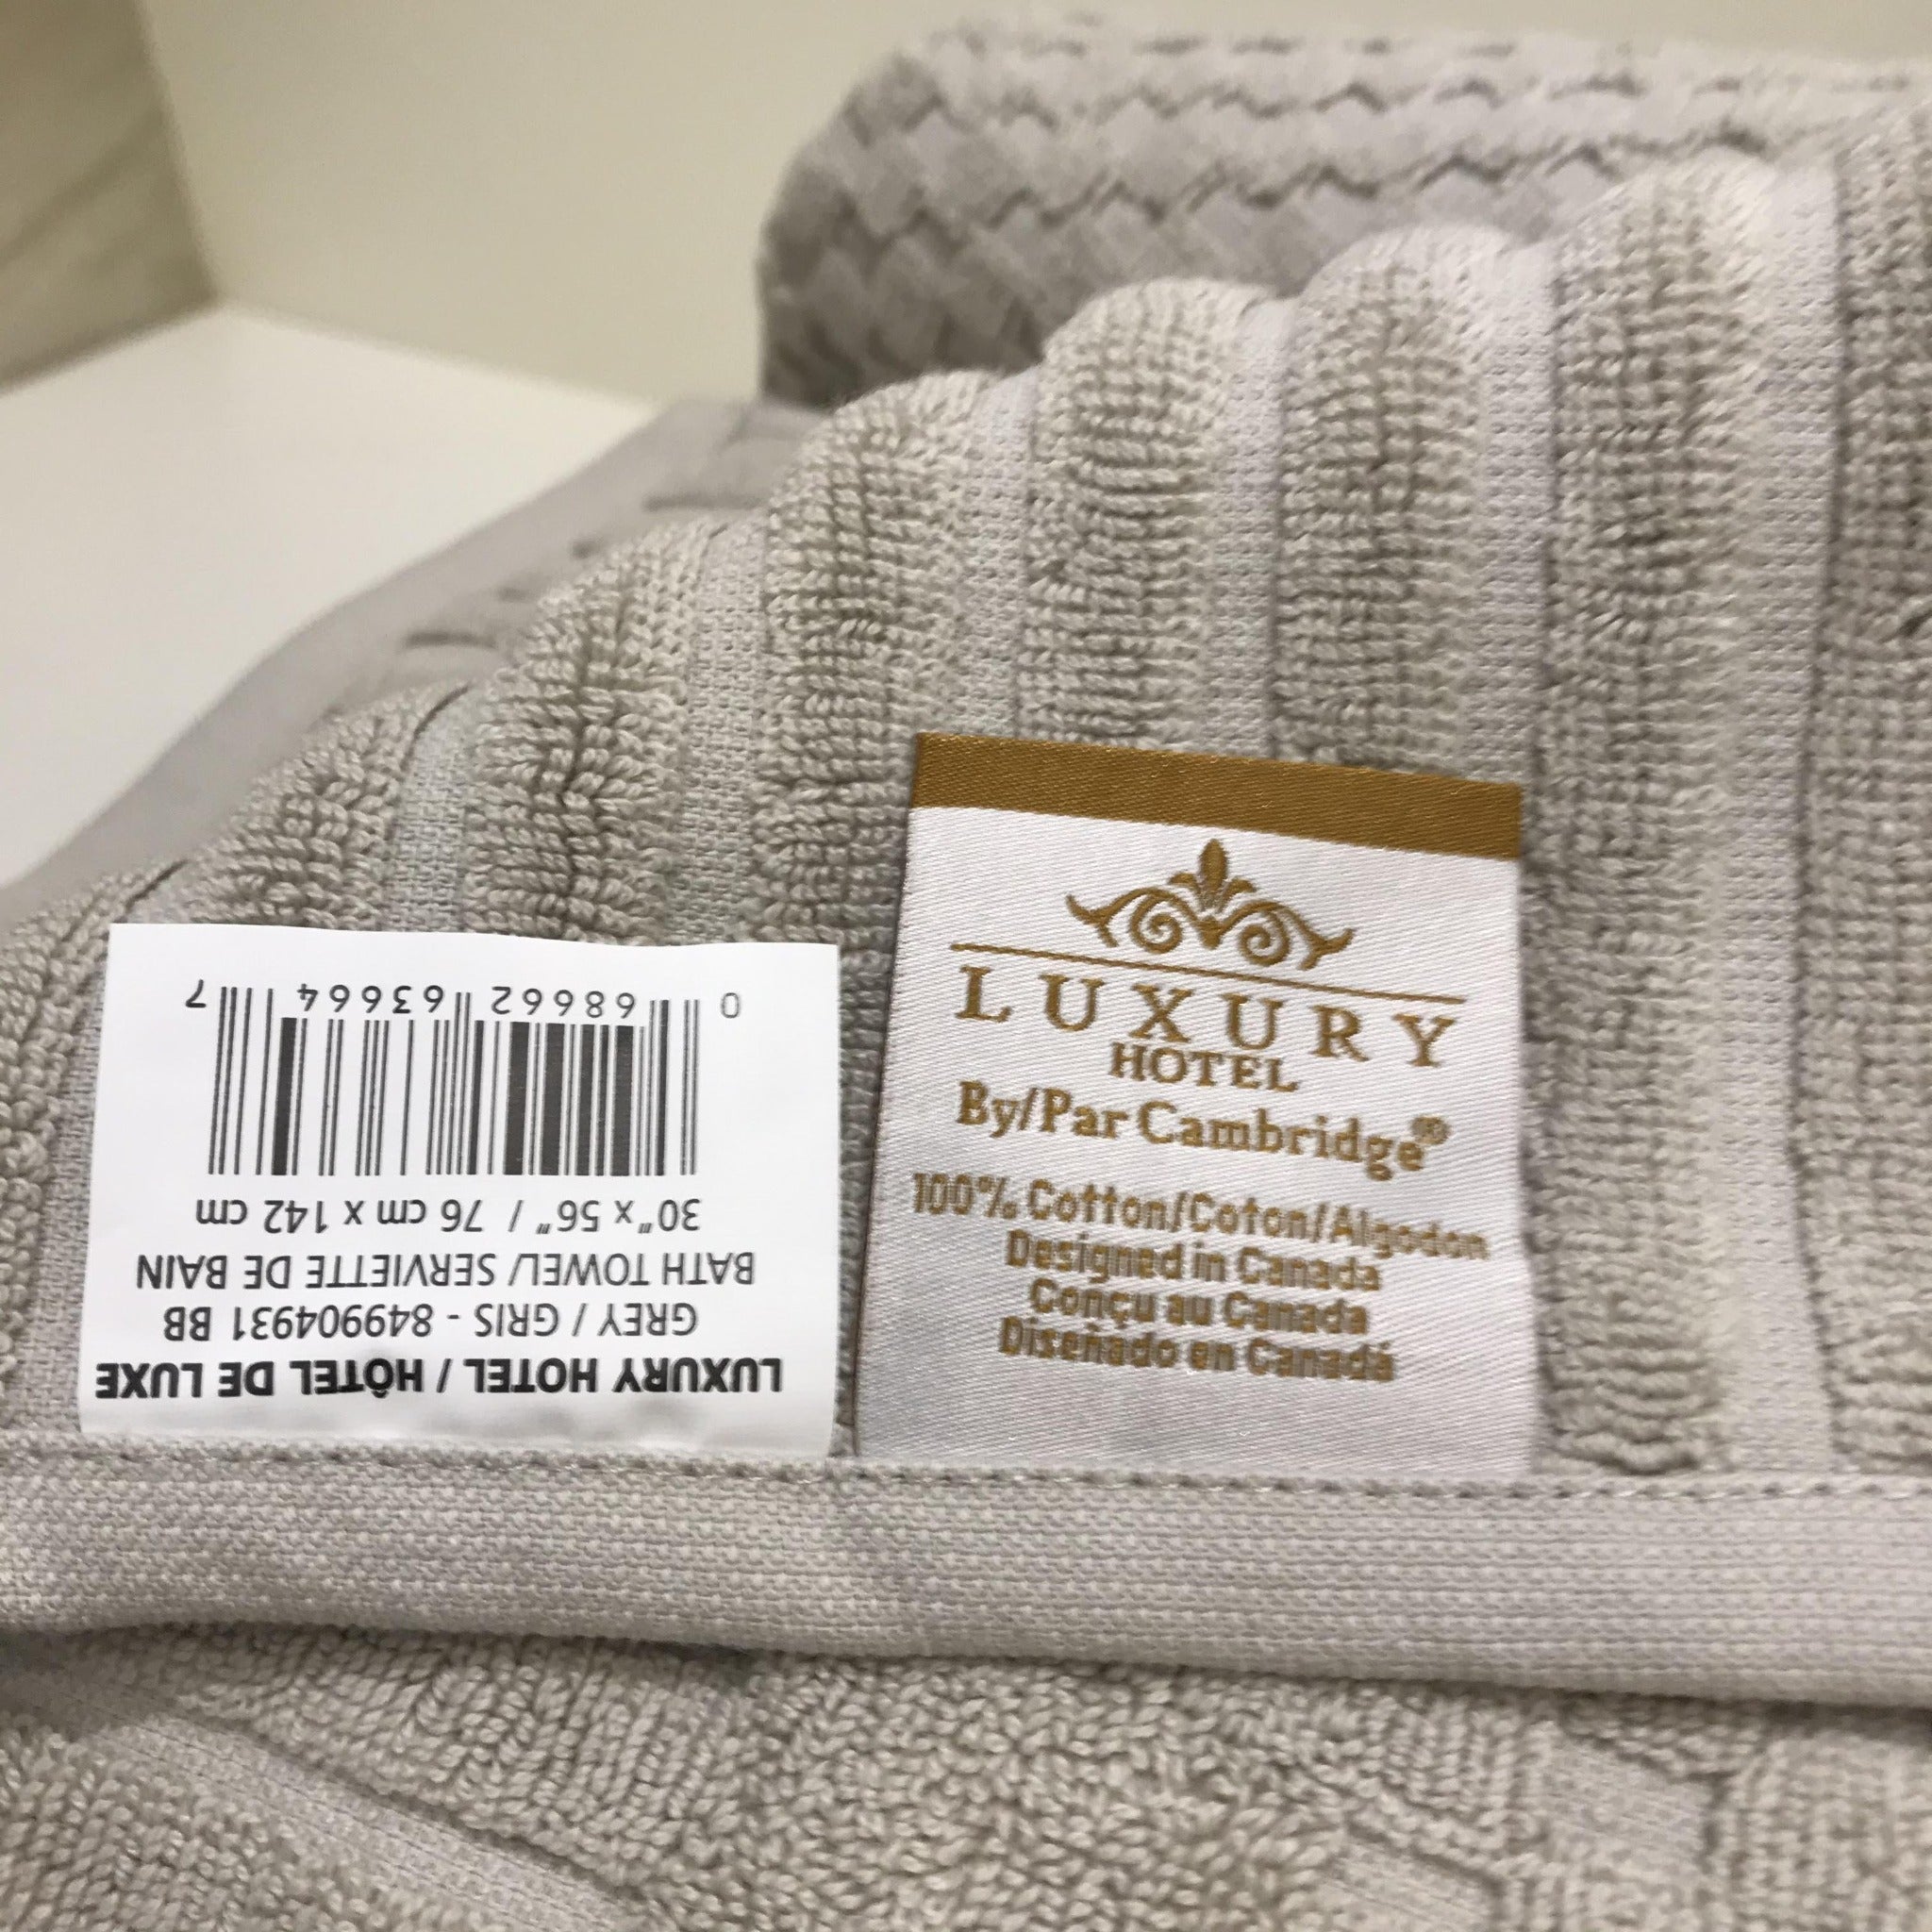 Luxury Hotel Bath Towel by Cambridge 100% Cotton